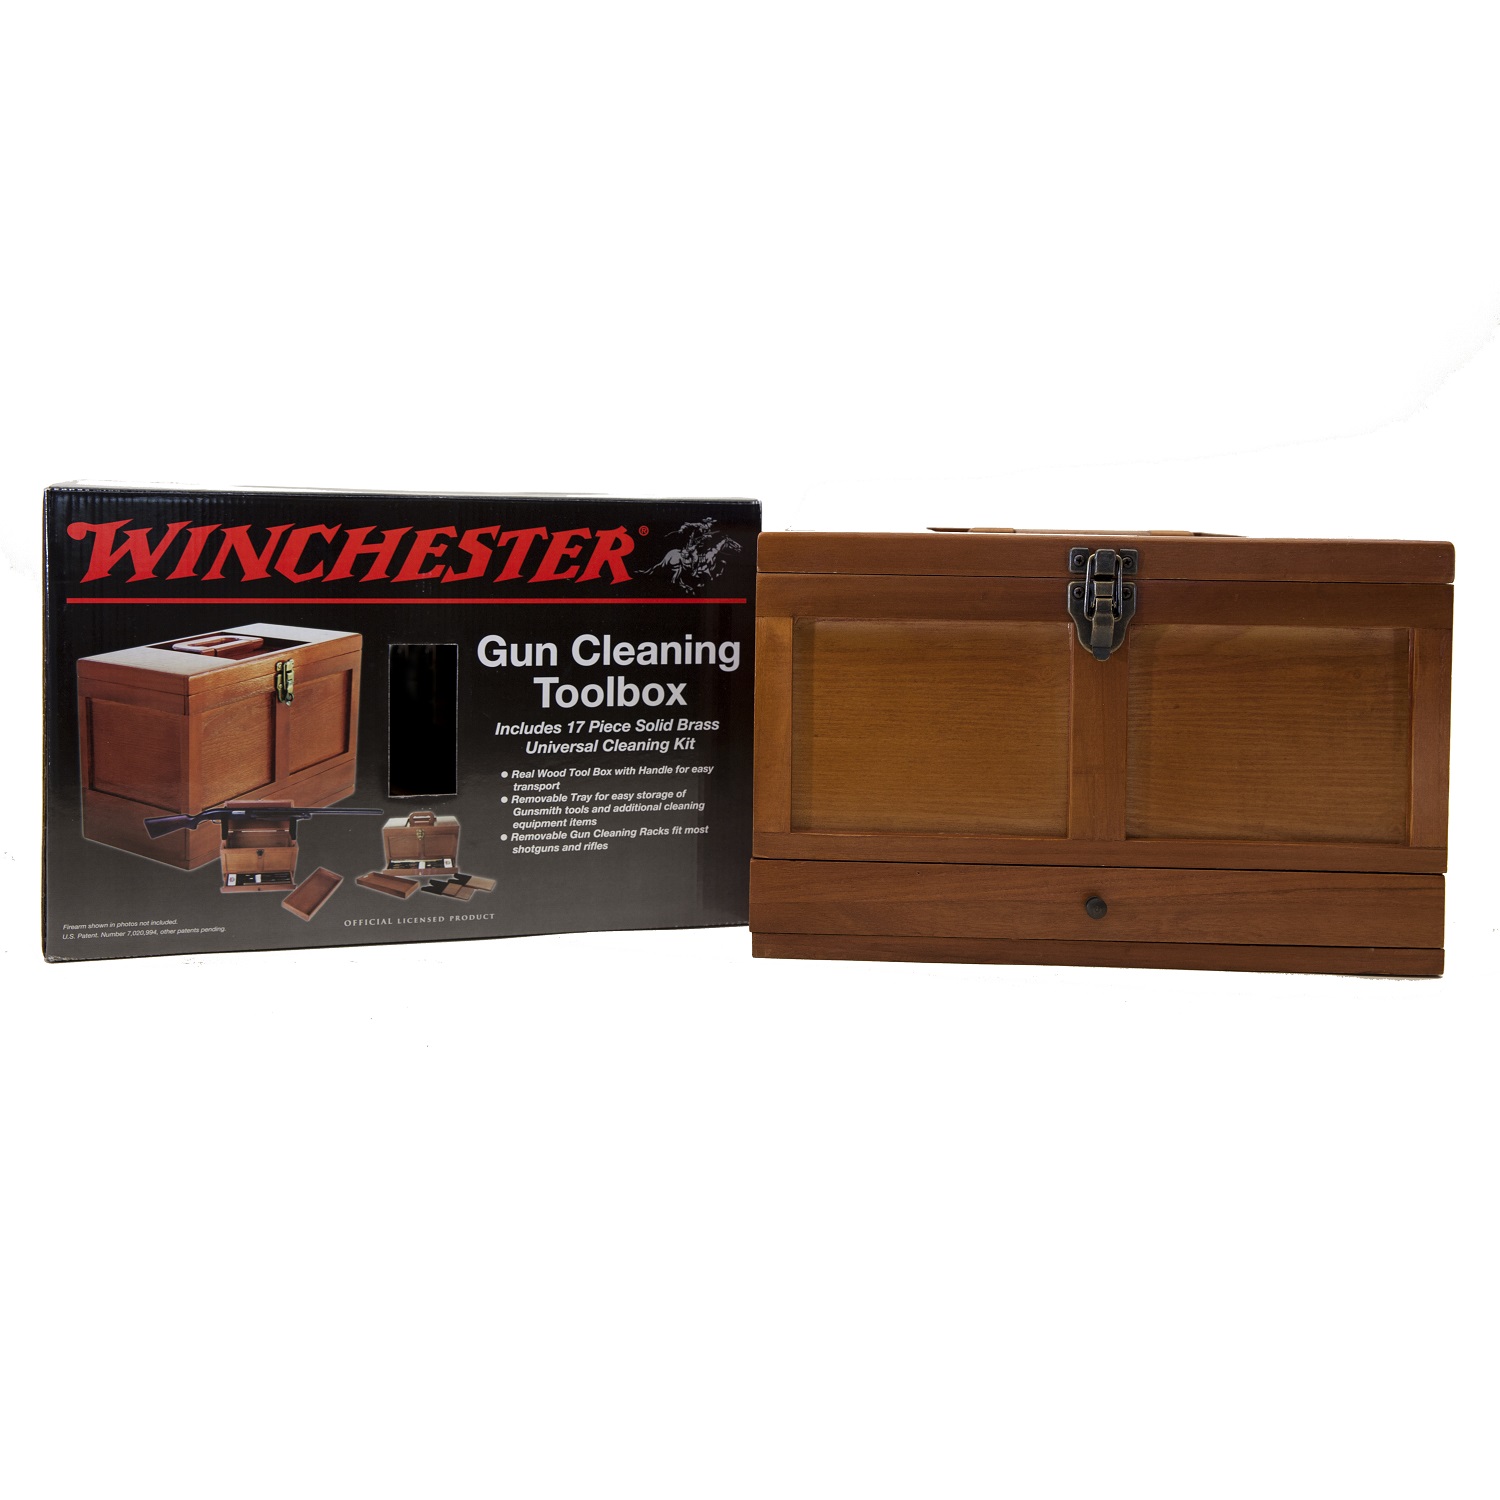 Winchester Gunmaster Toolbox Gun Cleaning Kit